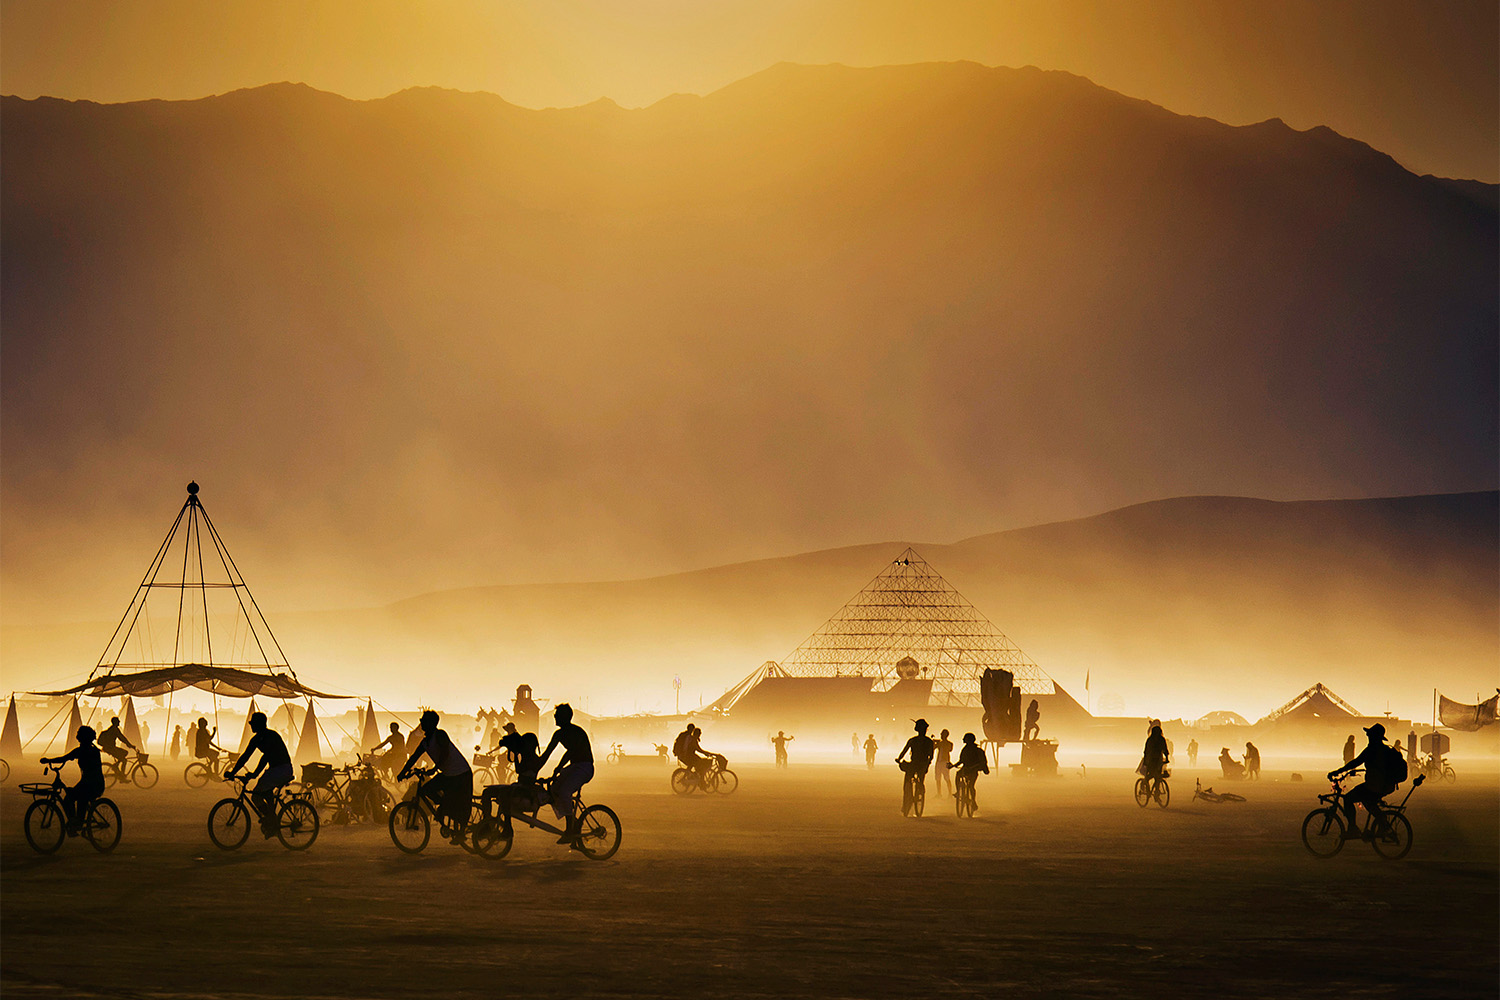 Sunlight and sand at Burning Man 